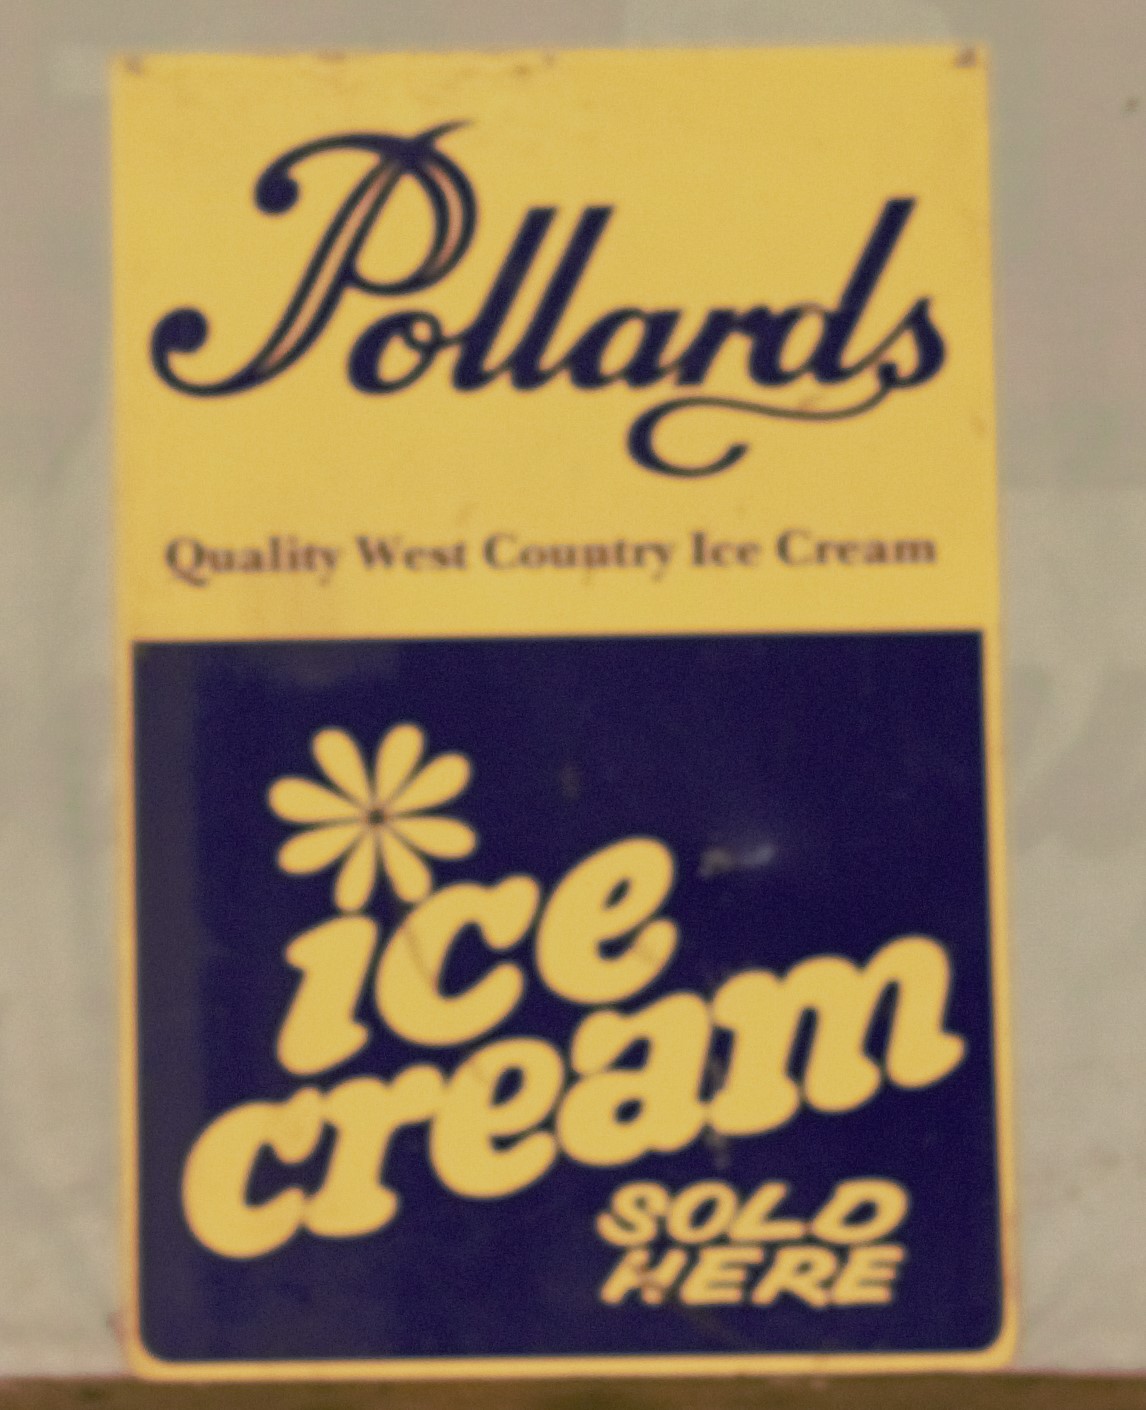 Five vintage ice cream advertising signs comprising Lyons Maid, Wall's, Pollards, Eldorado & Mars, - Image 2 of 2